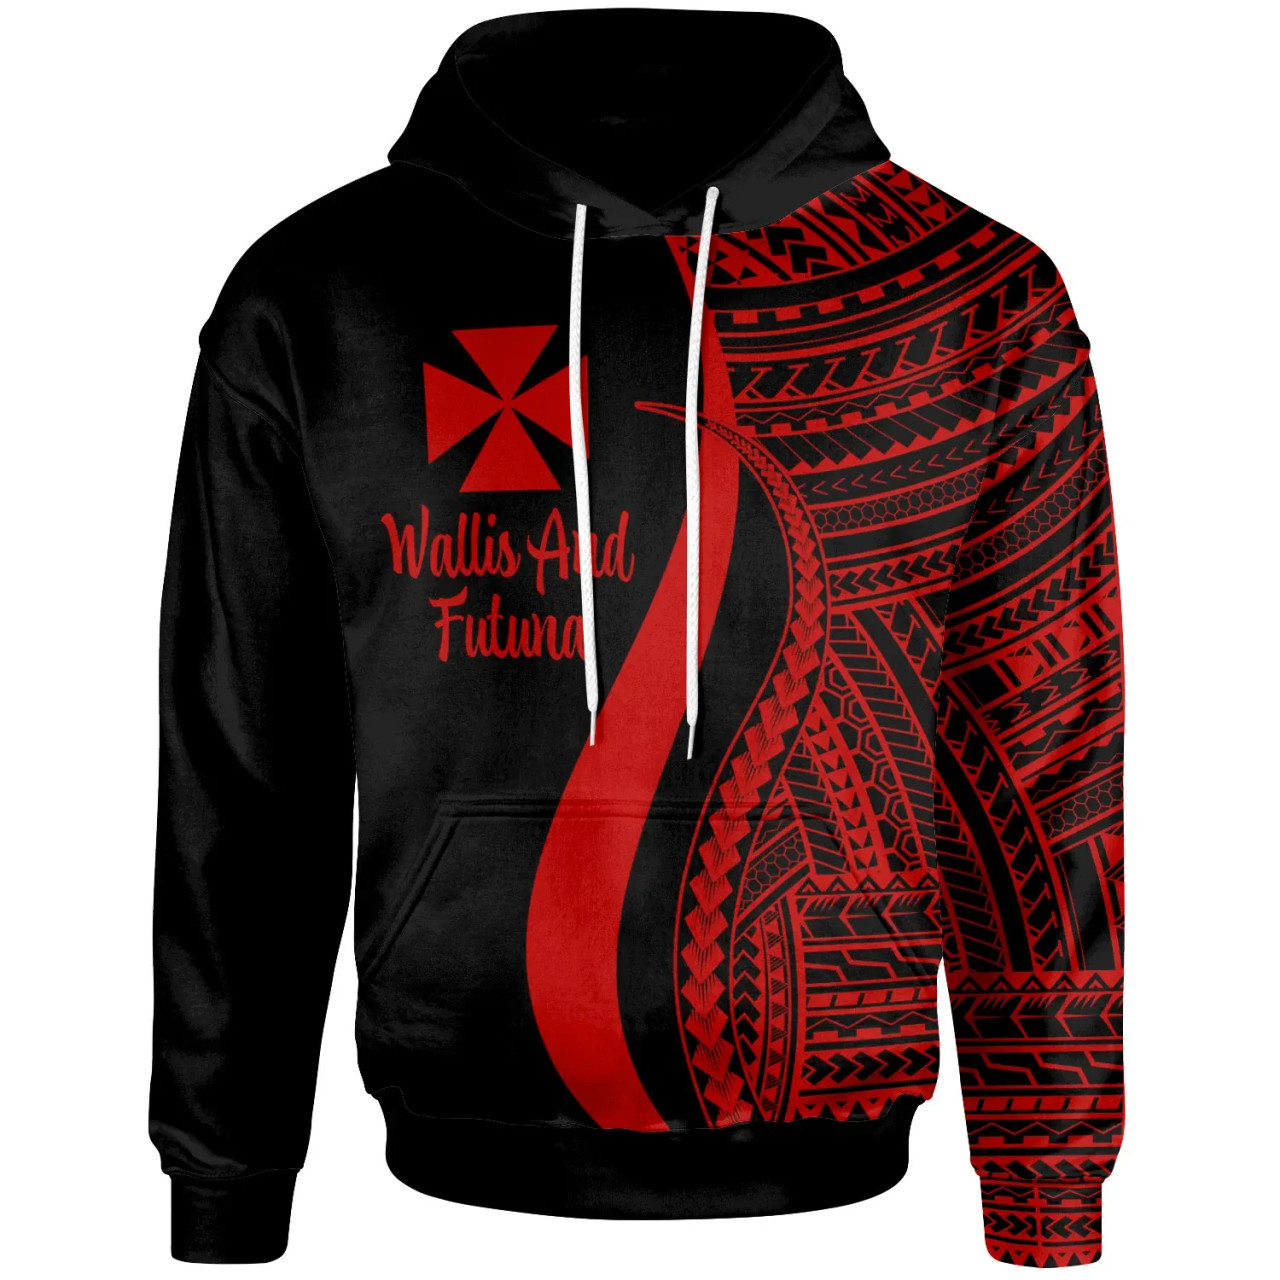 Wallis and Futuna Hoodie Red - Tentacle Tribal Pattern